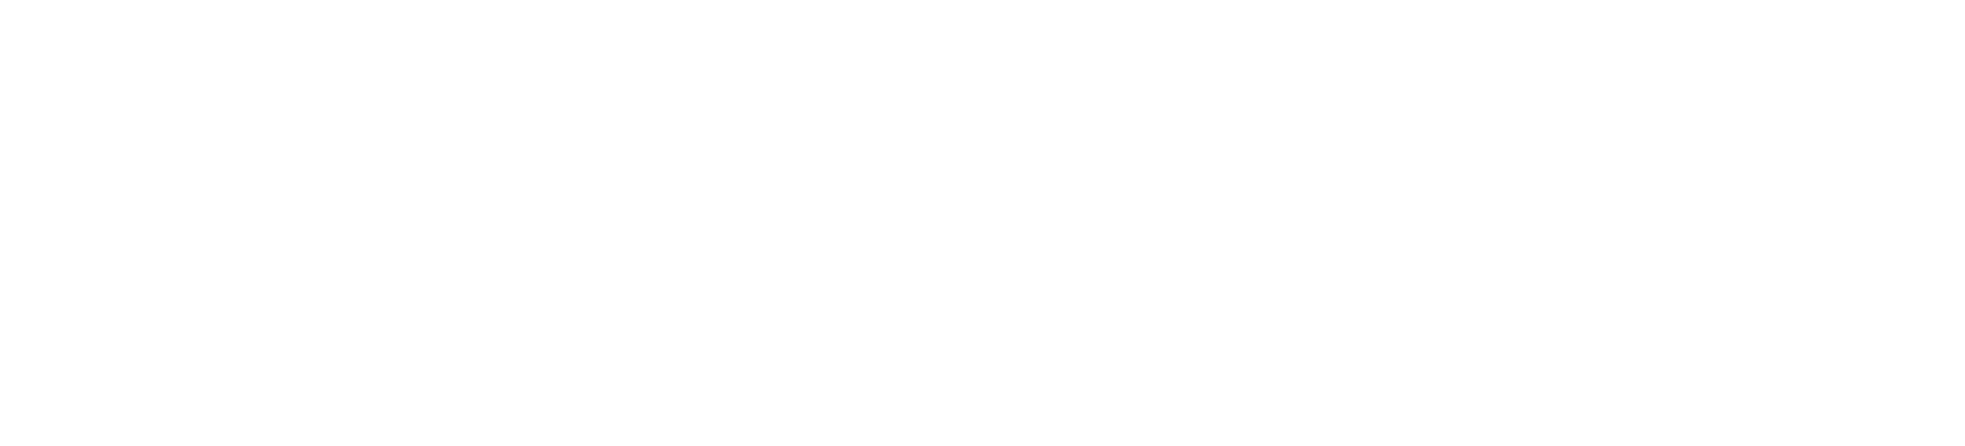 proMaster Enterprise